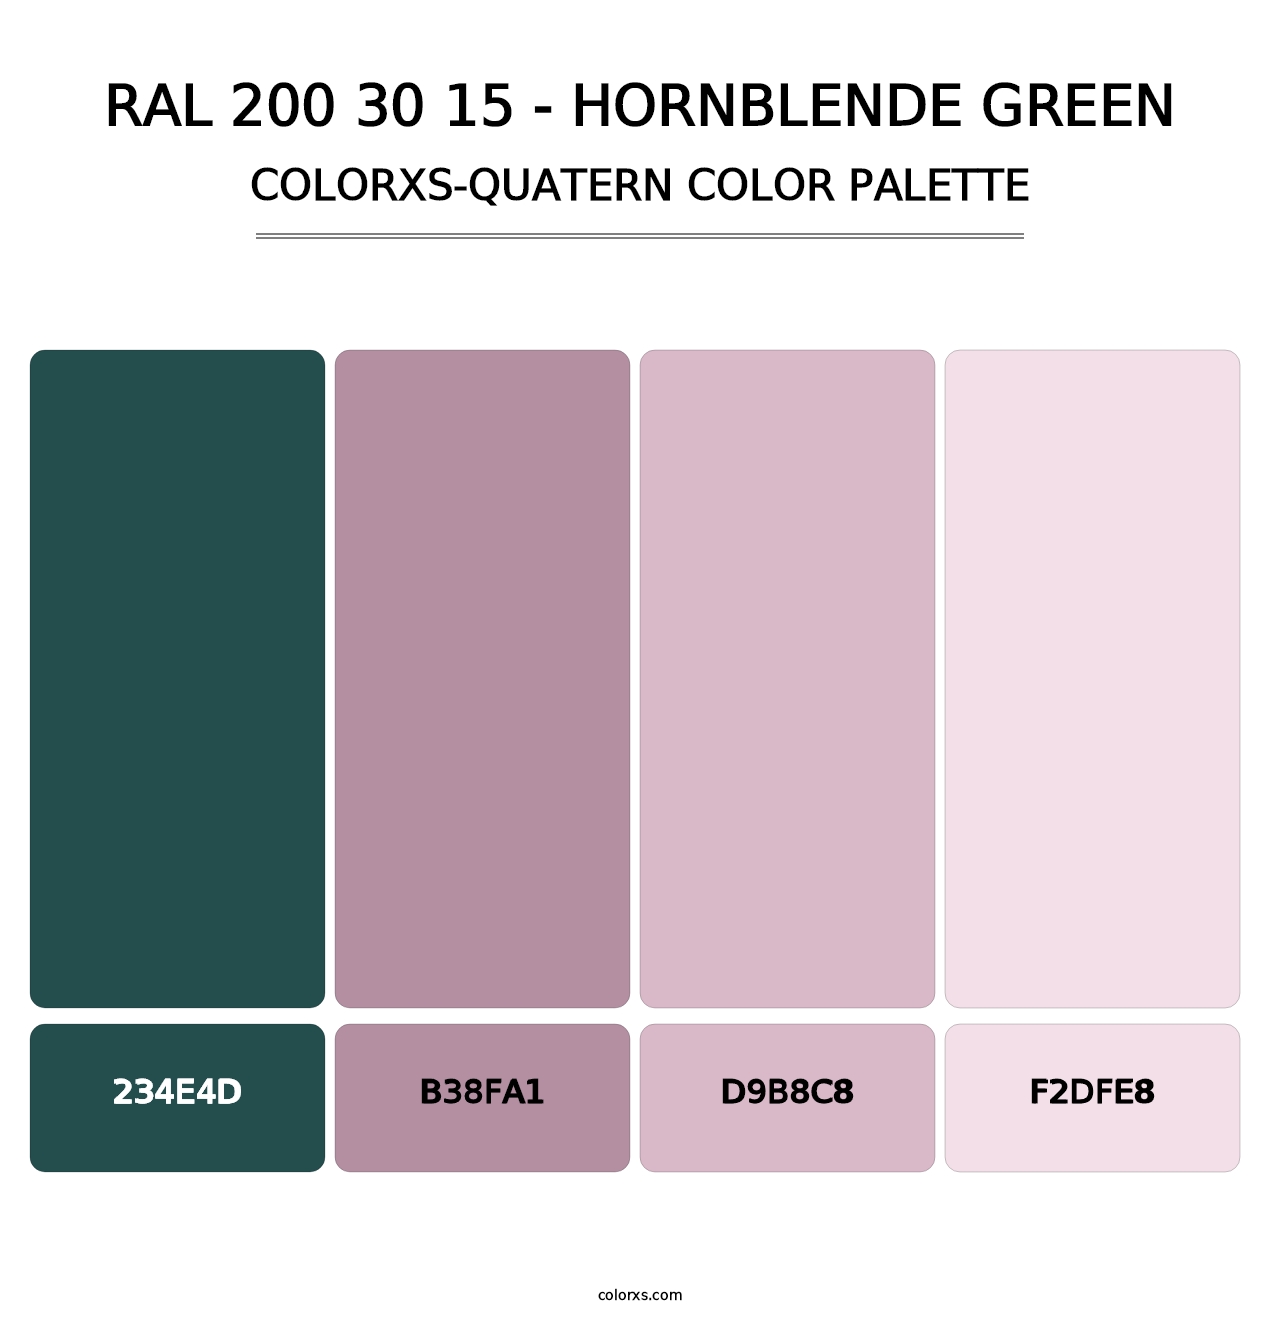 RAL 200 30 15 - Hornblende Green - Colorxs Quatern Palette